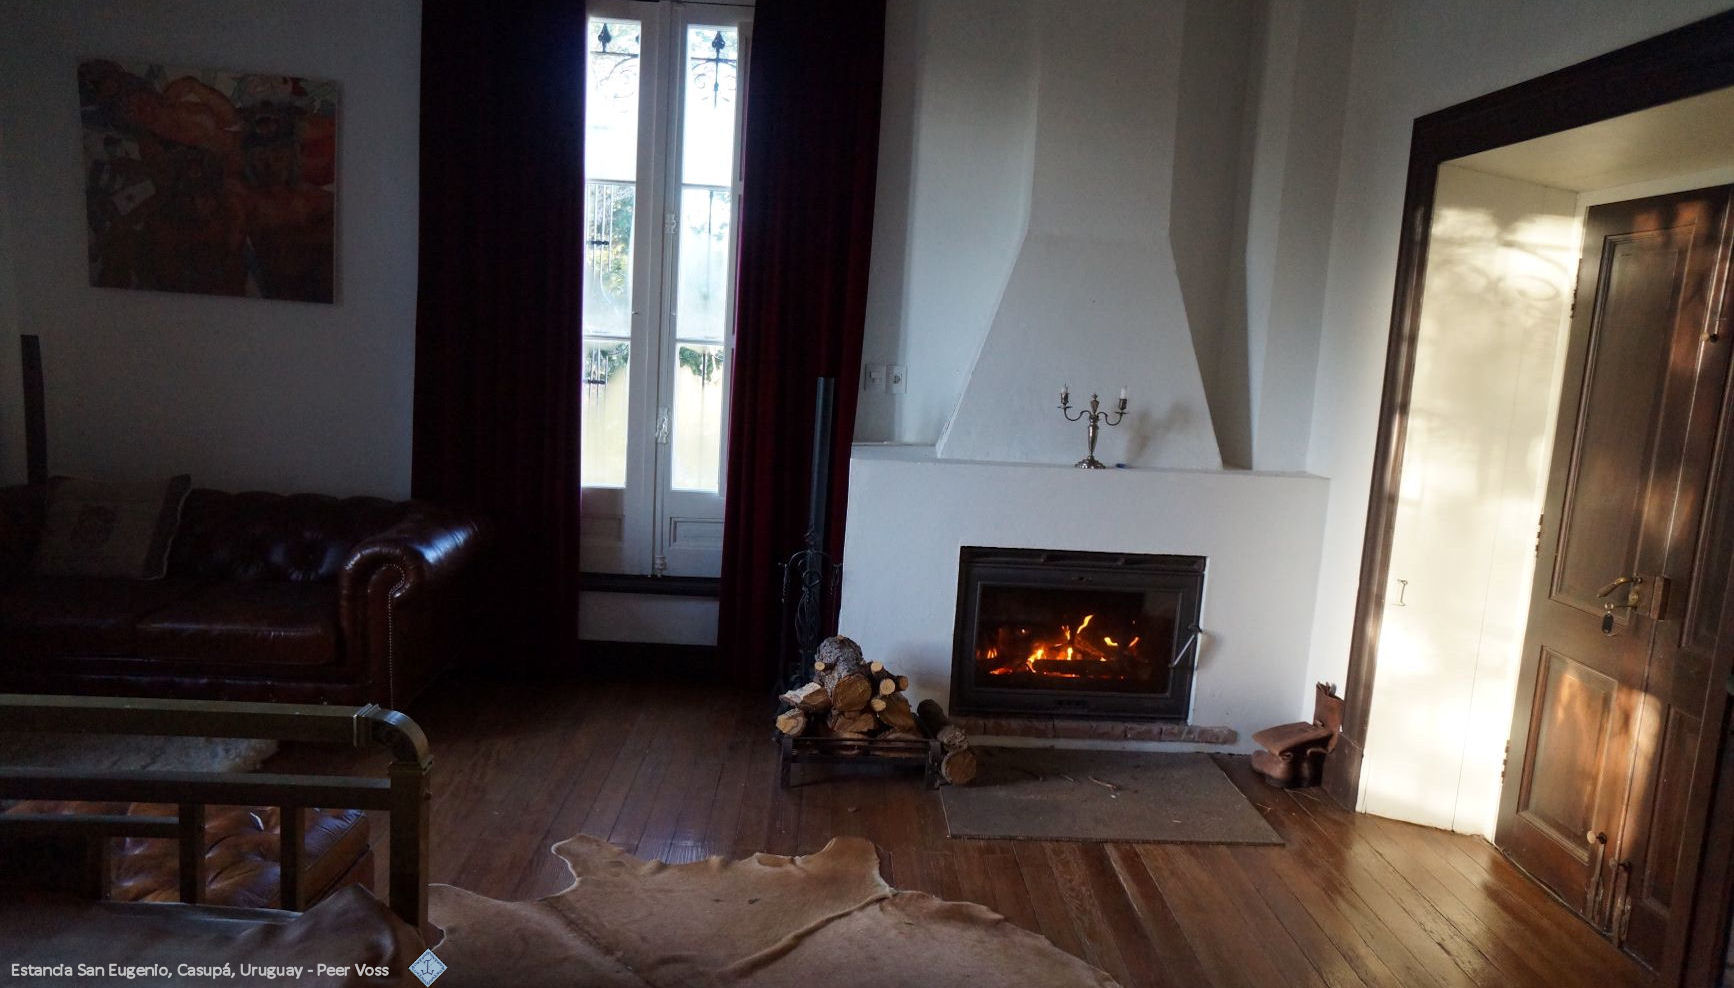 Estancia guest room w fireplace